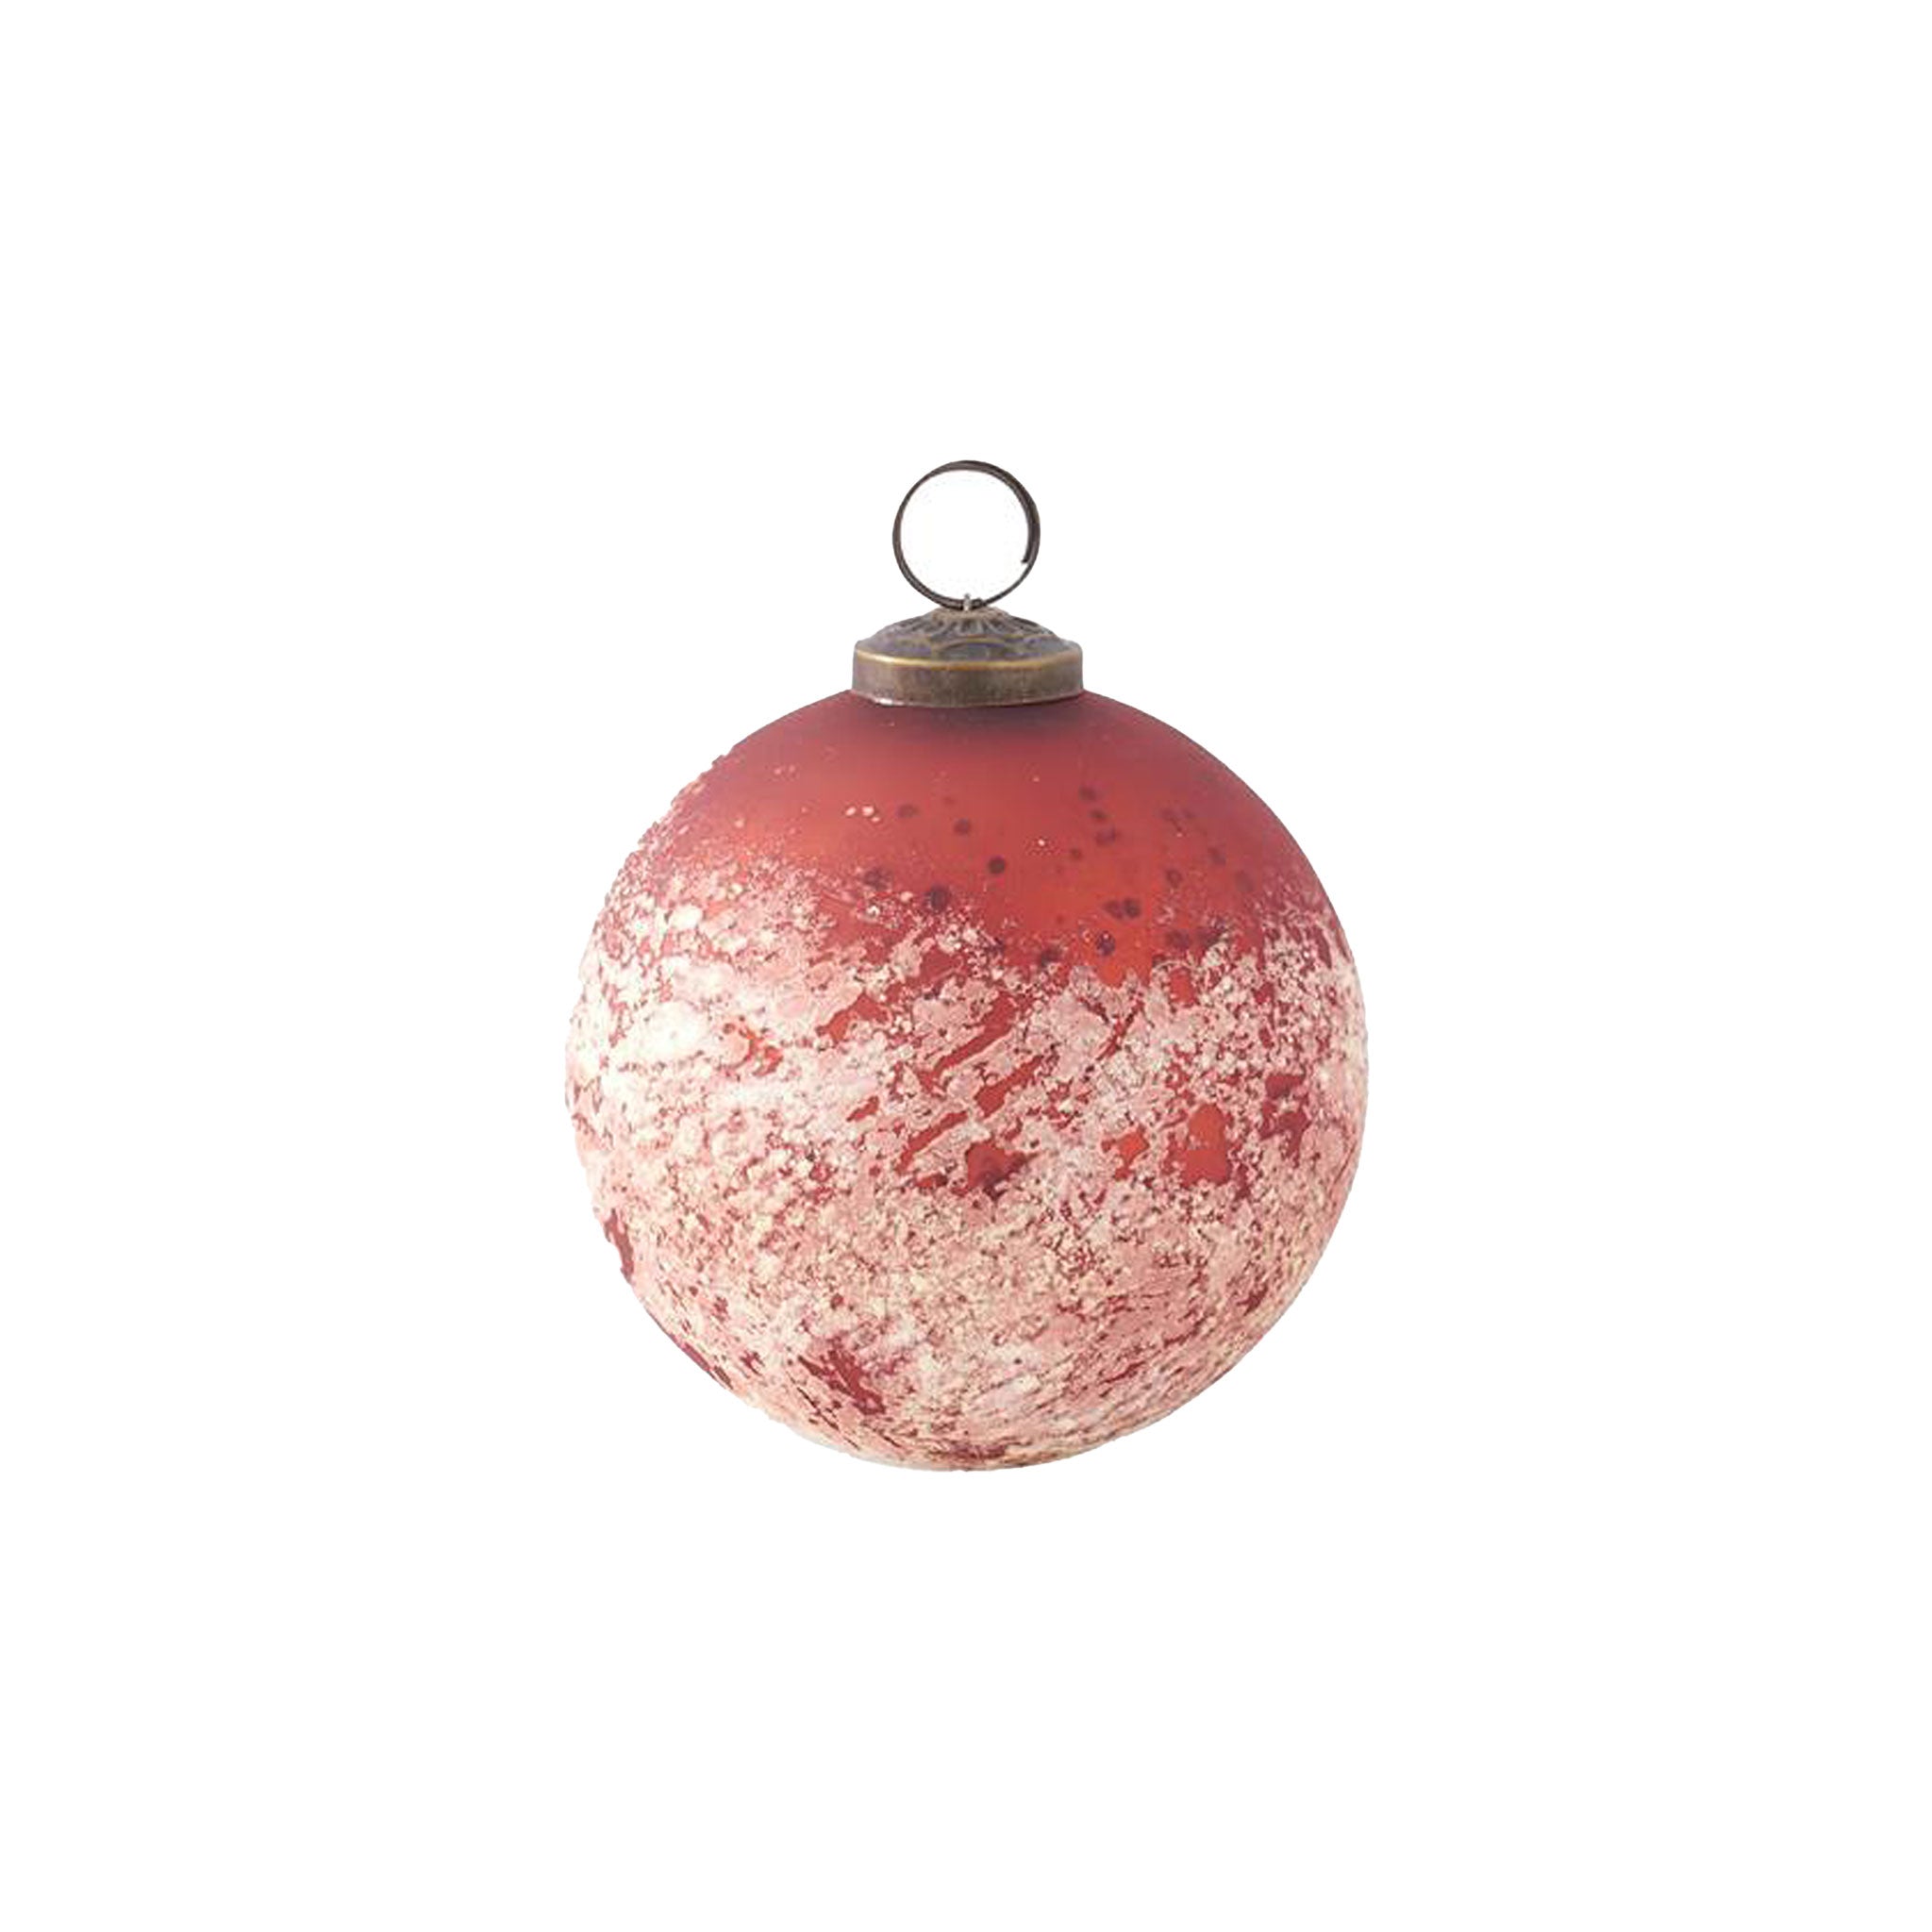 Crispin Speckle Ornament in Red